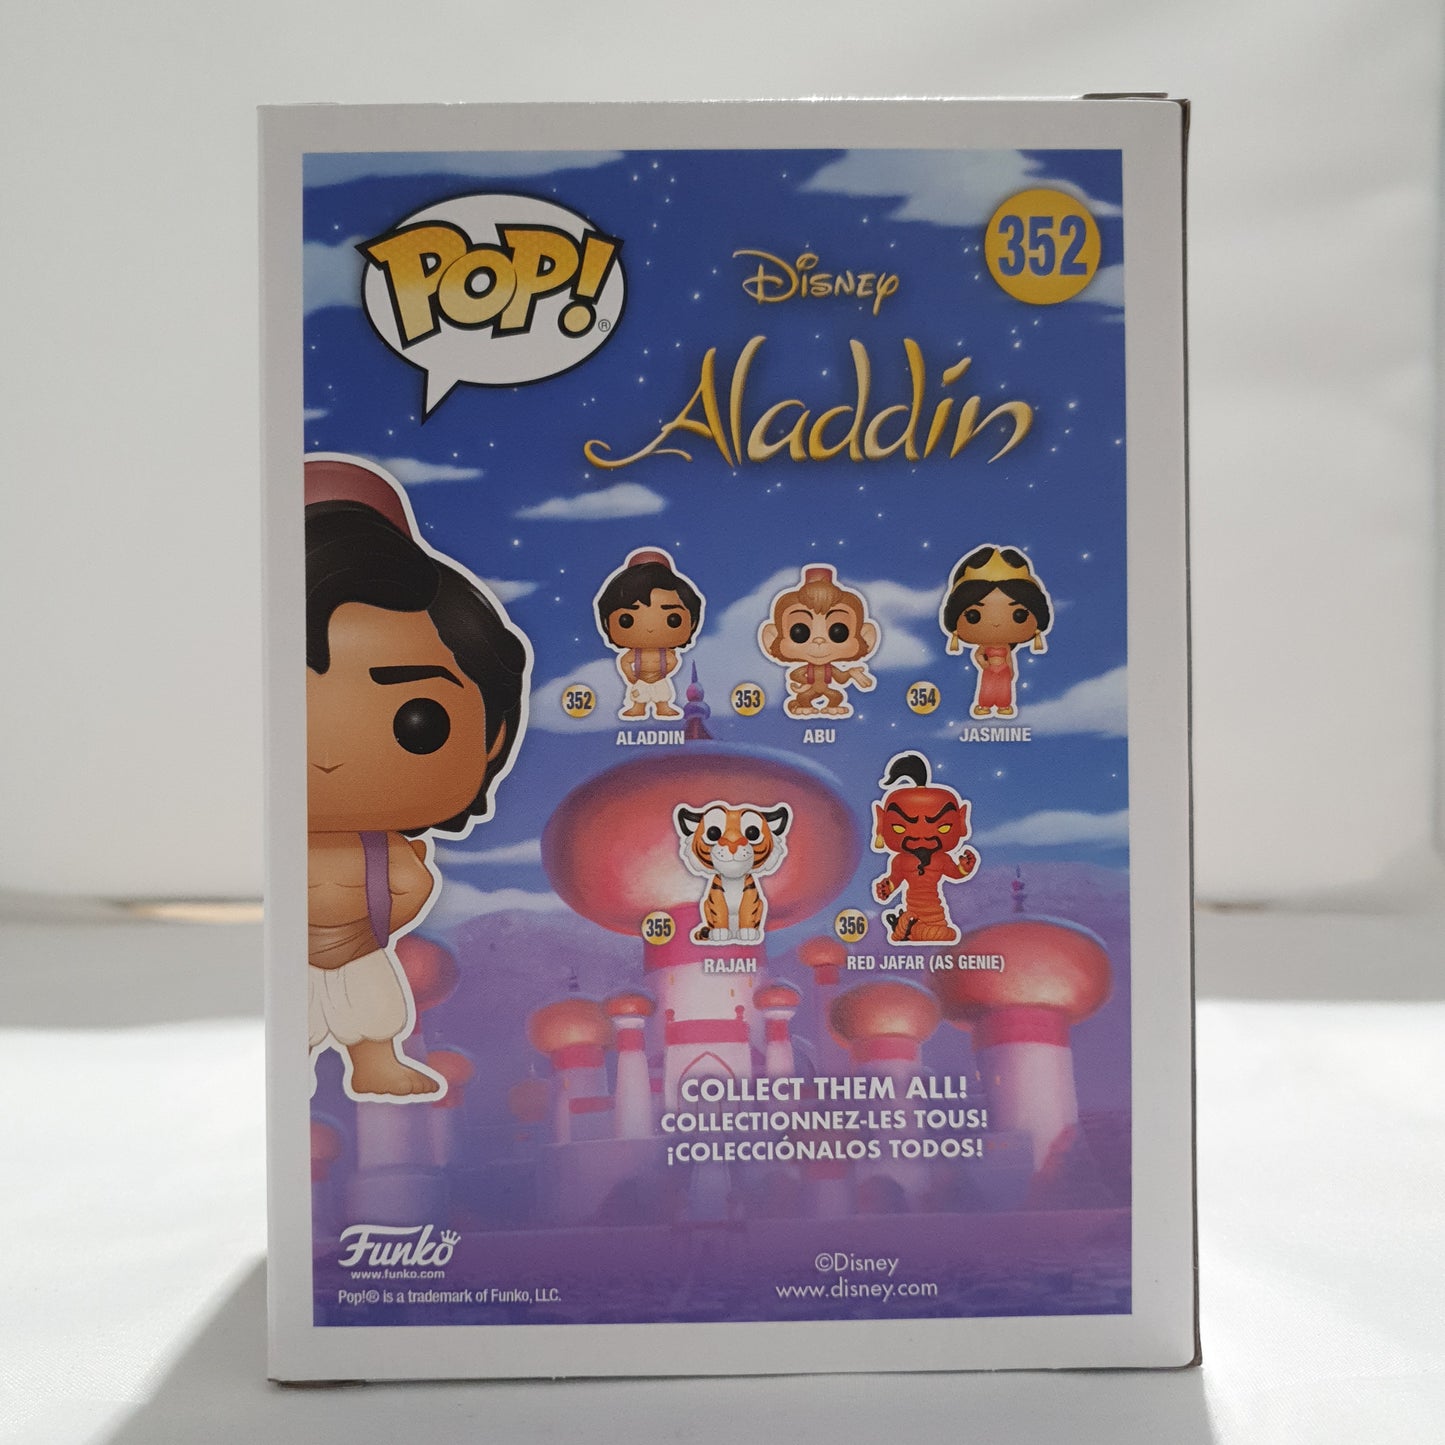 Aladdin - Aladdin #352 Signed Pop! Vinyl